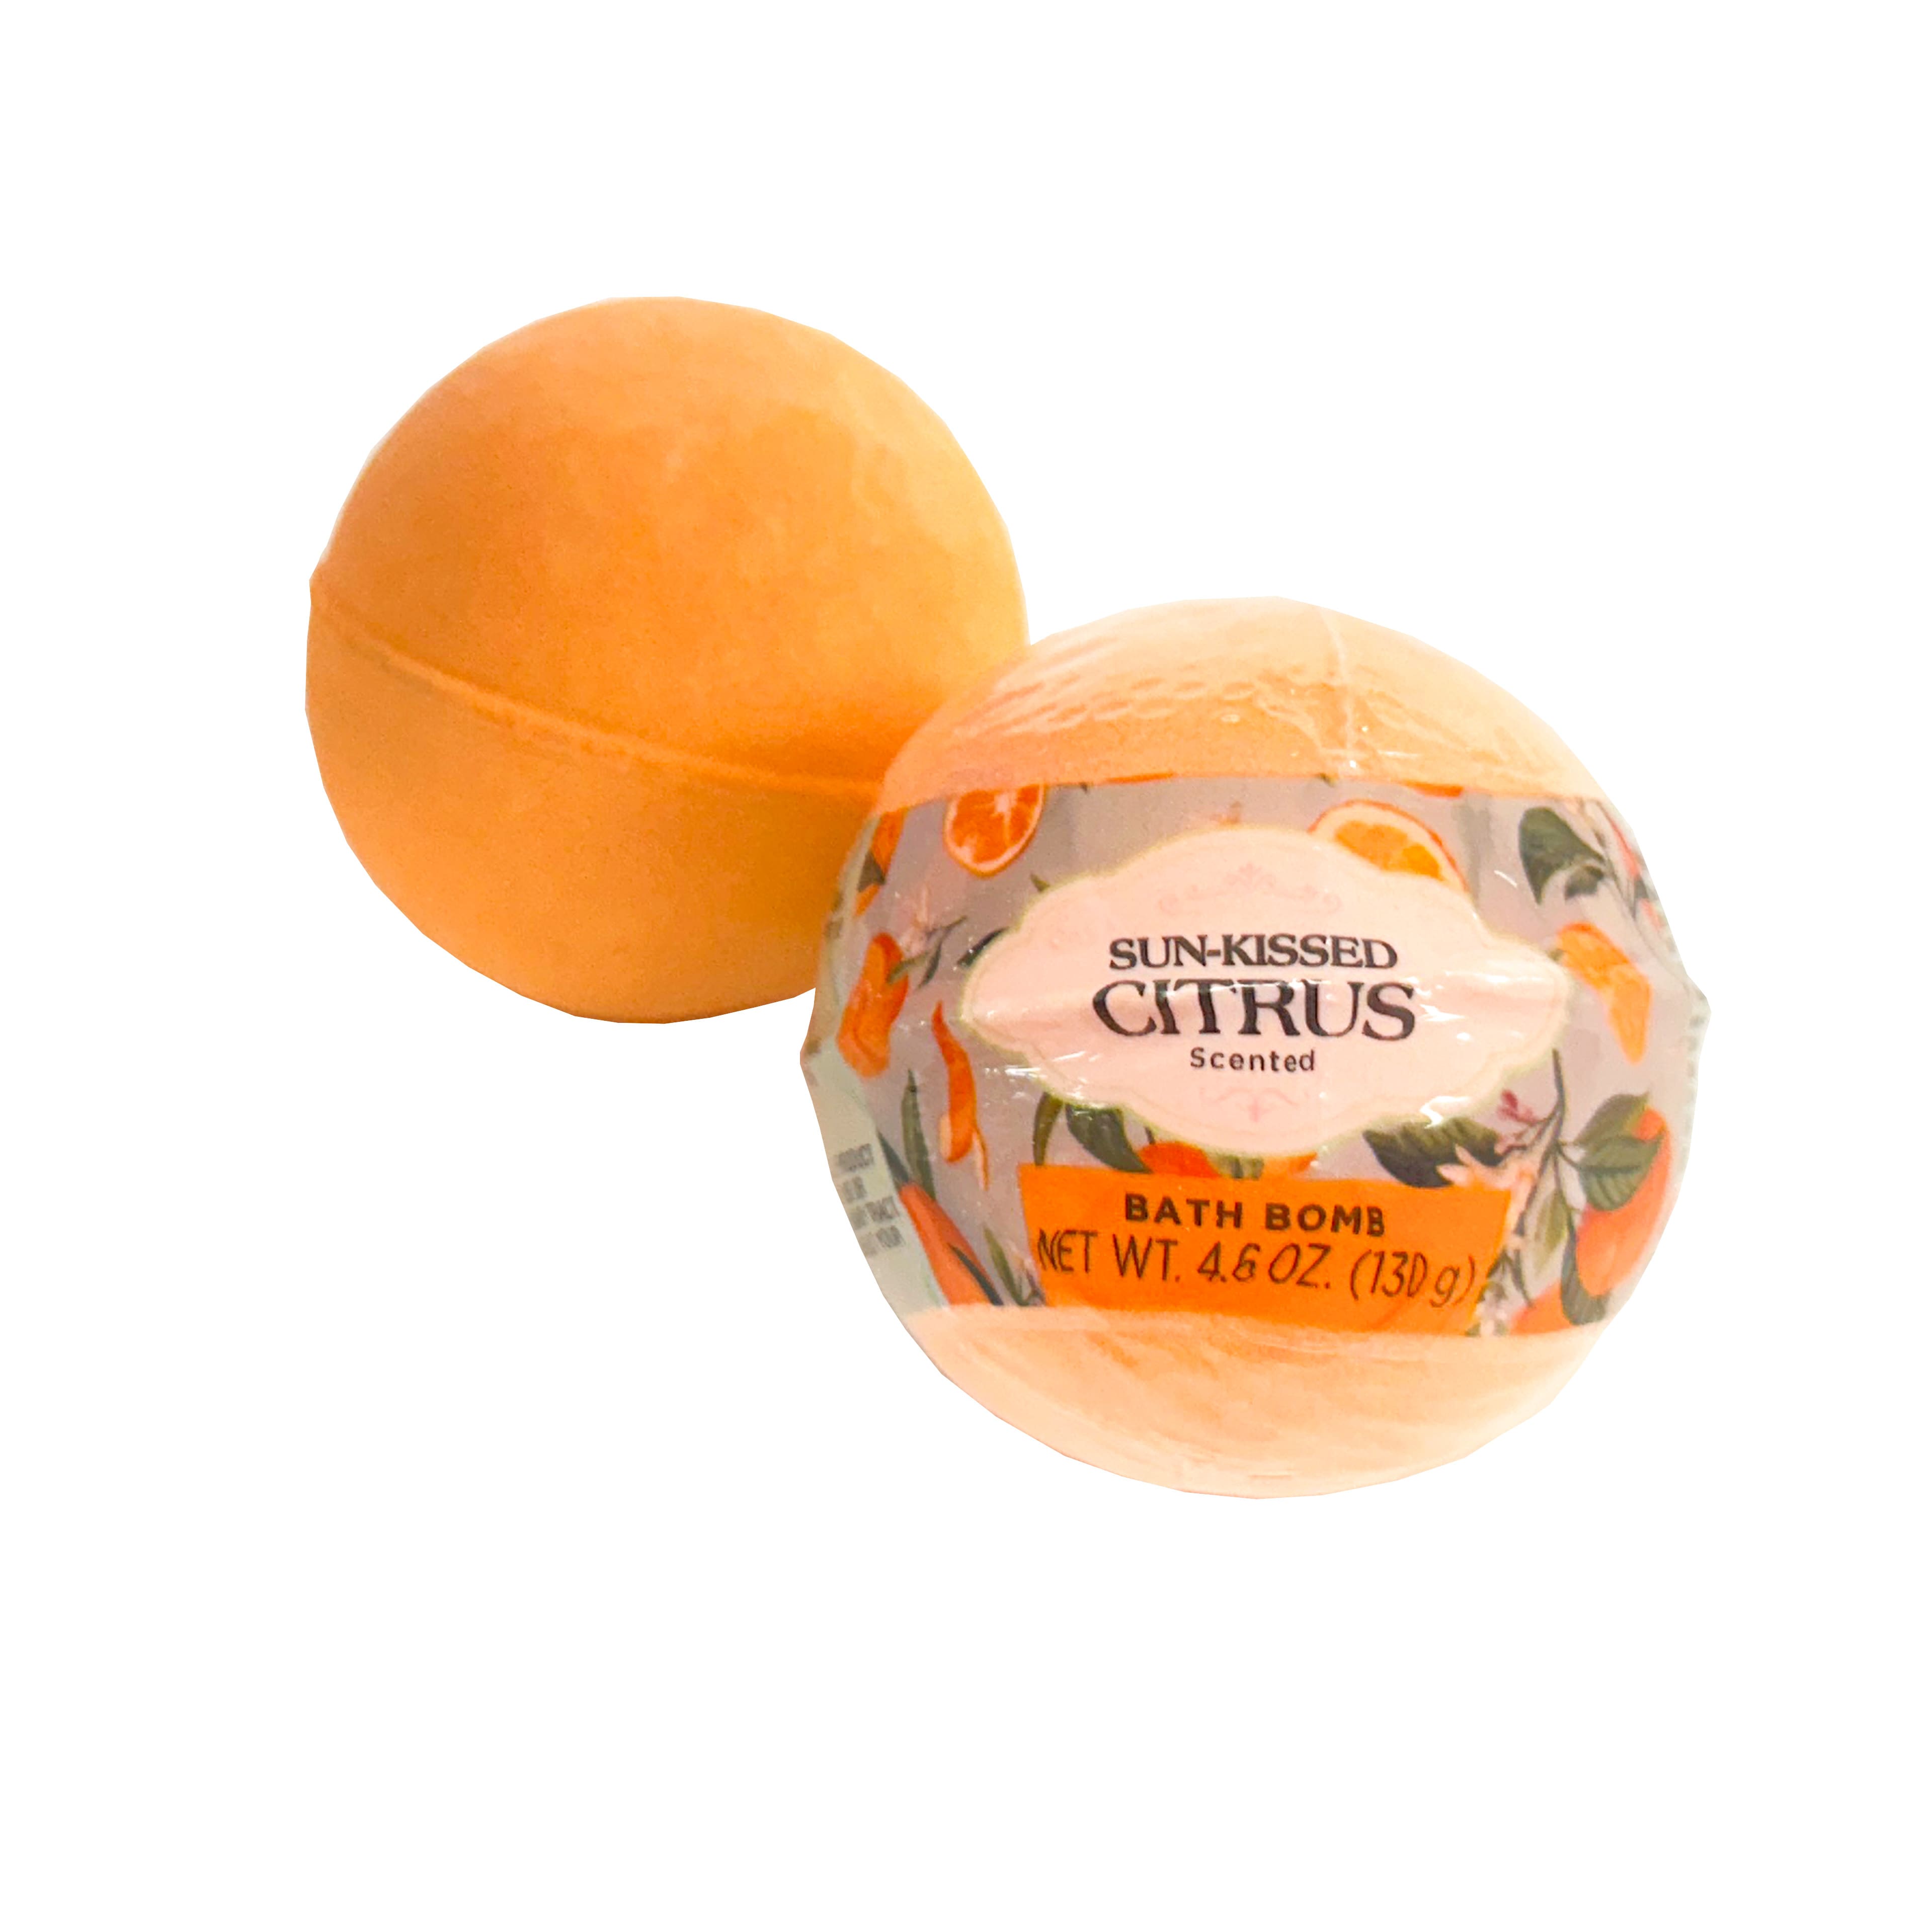 Sun-Kissed Citrus Scented Bath Bomb